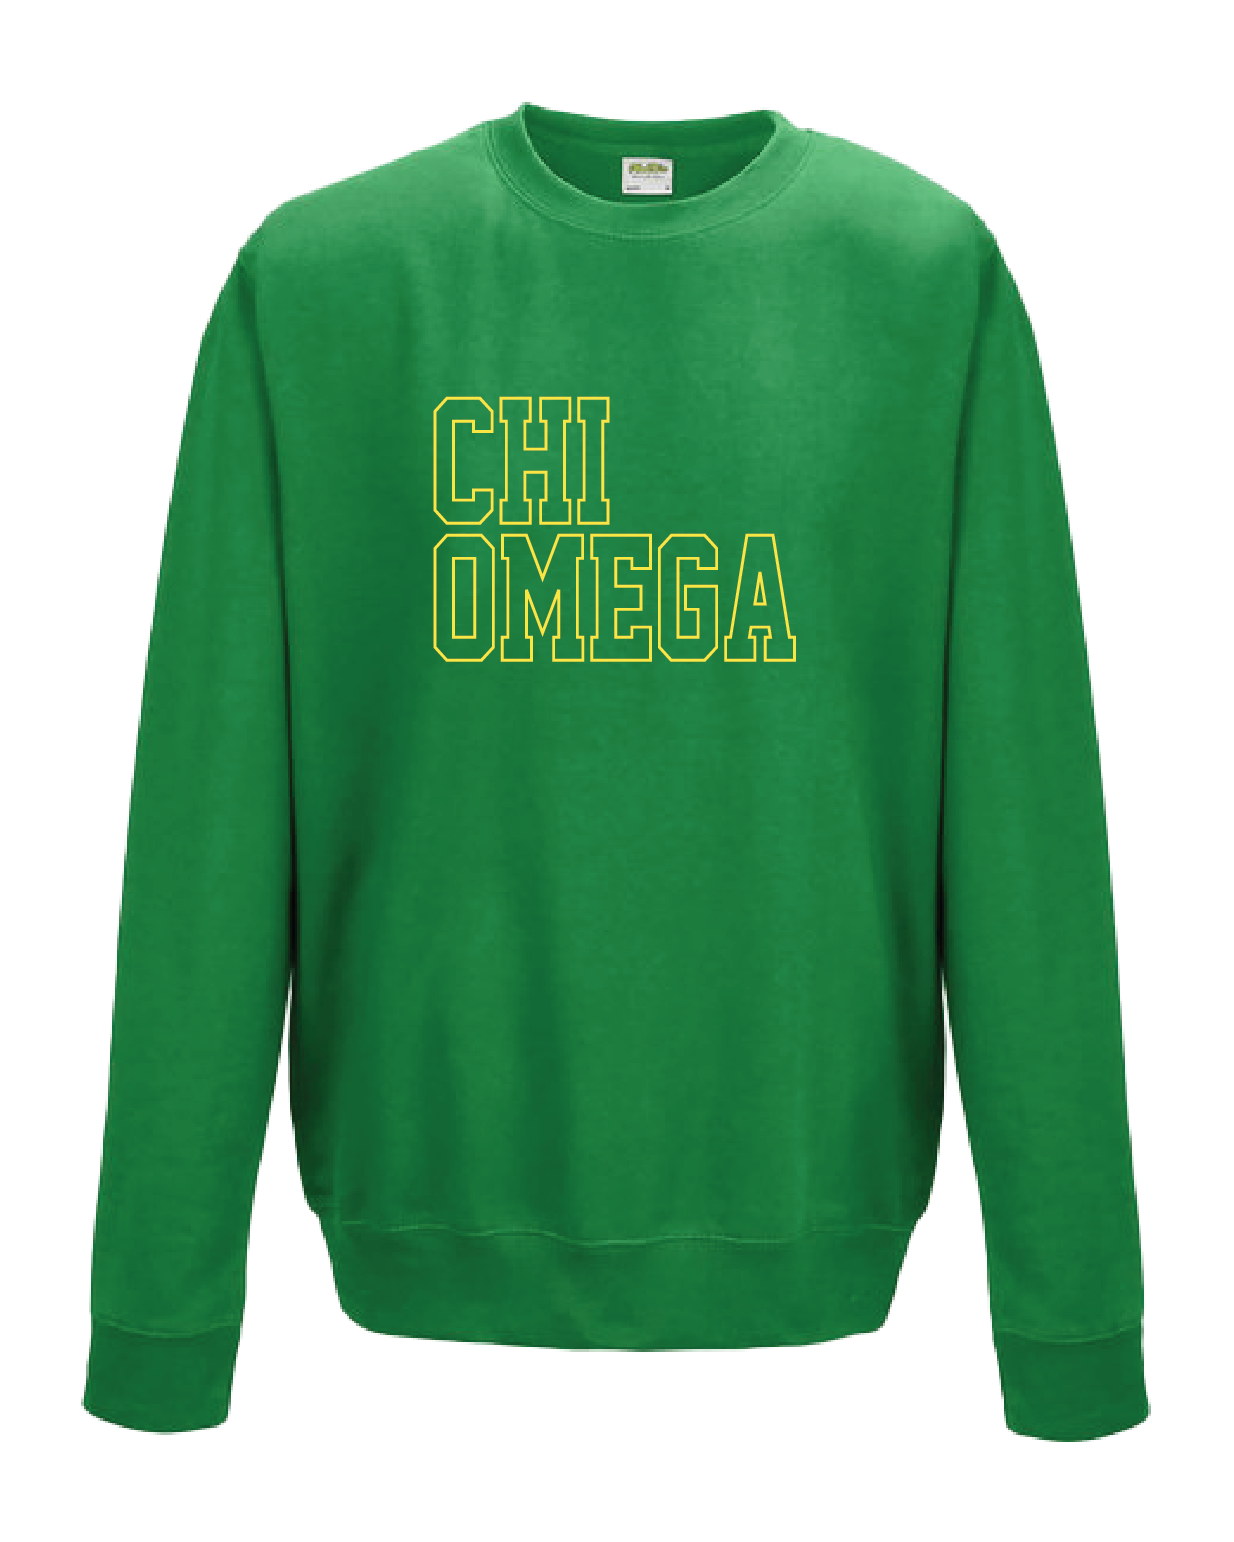 WS - Chi Omega Block Crewneck (min qty 6) $32 / $70